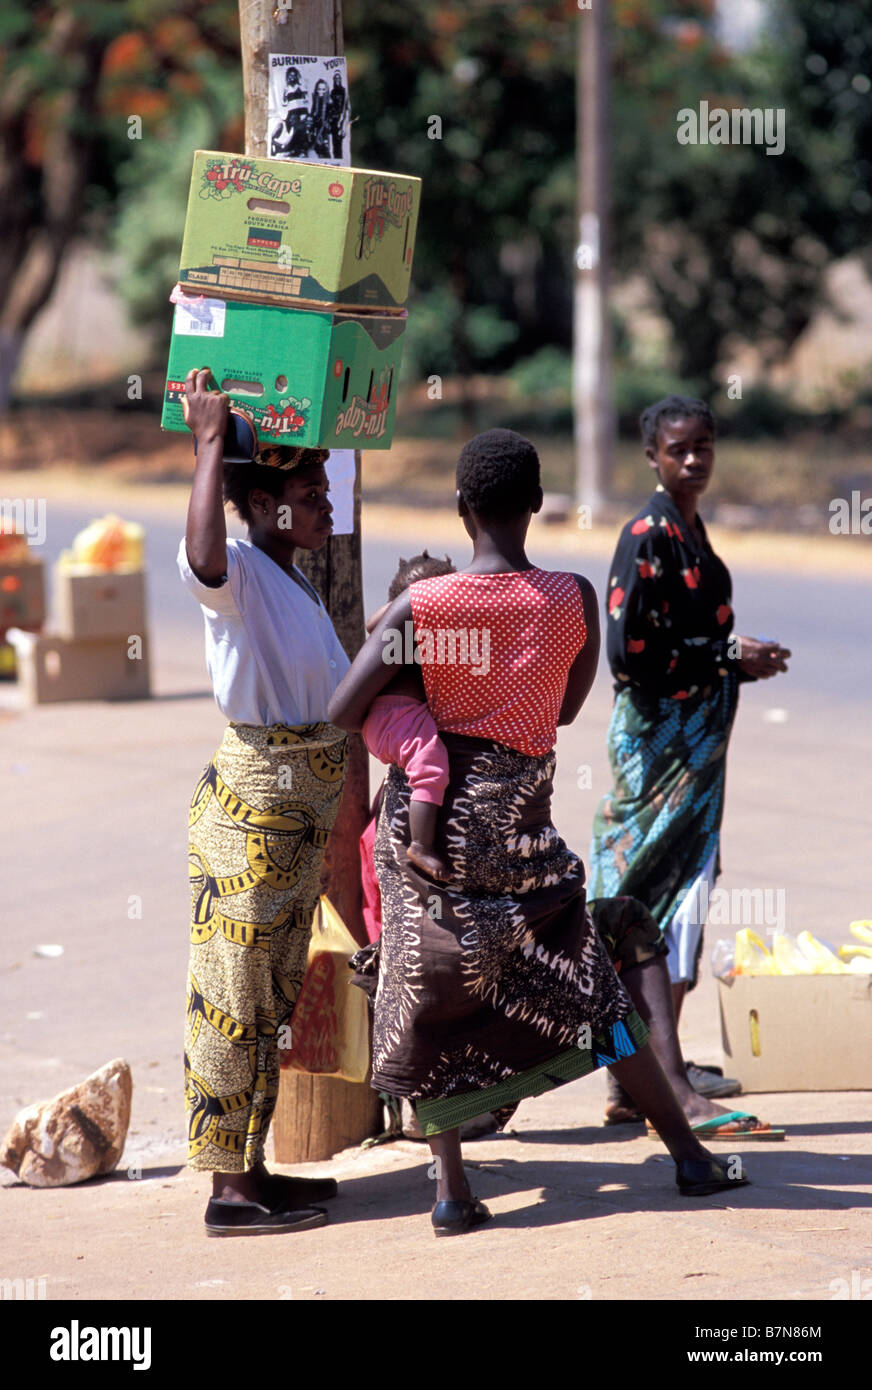 Zambia Lusaka, women with boxes on head Stock Photo